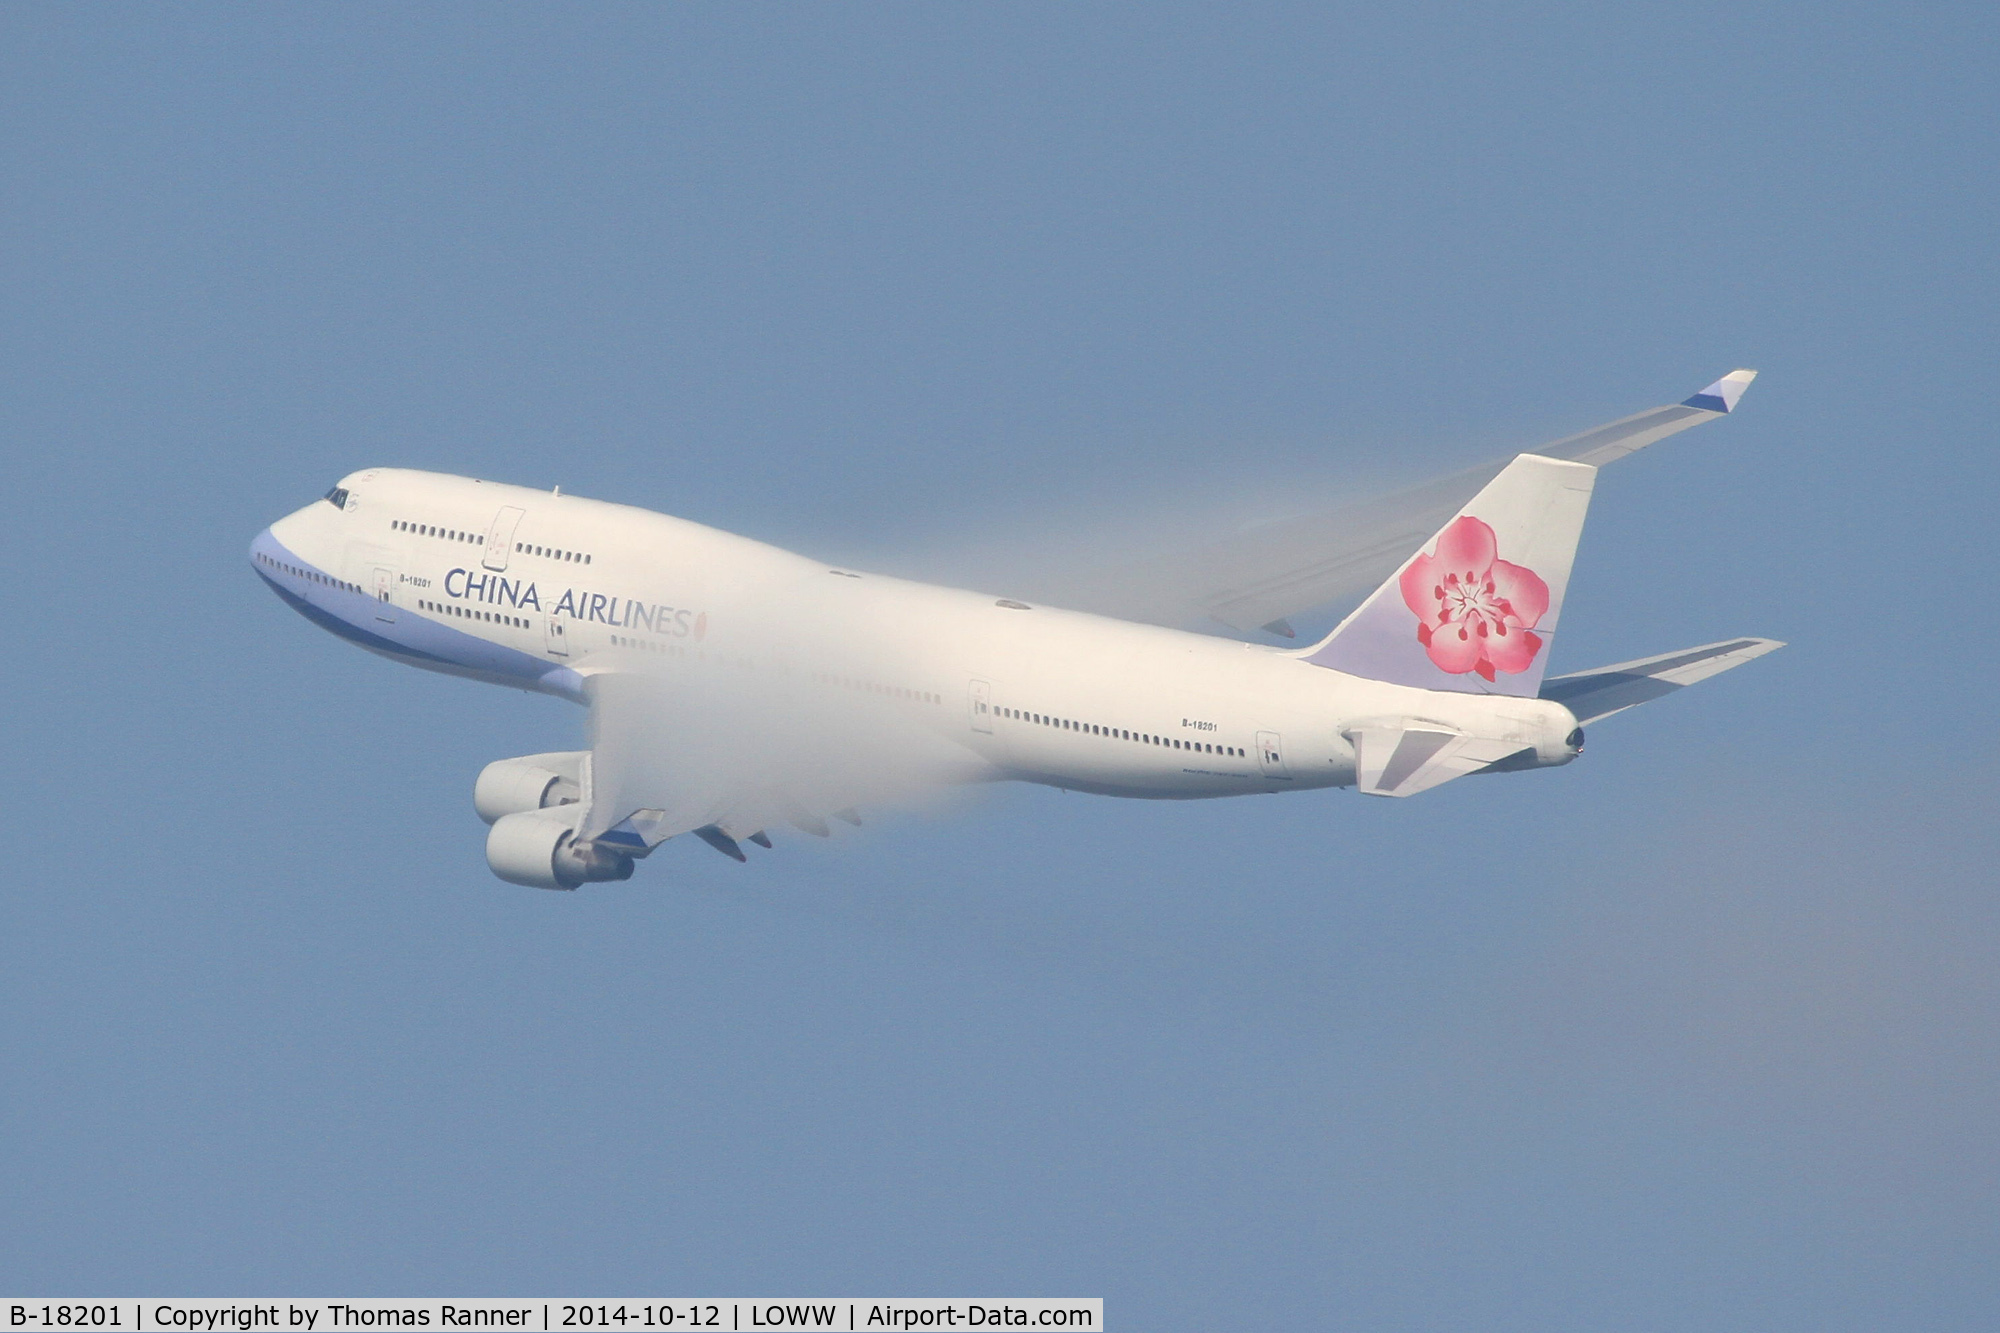 B-18201, 1997 Boeing 747-409 C/N 28709, China Airlines B747